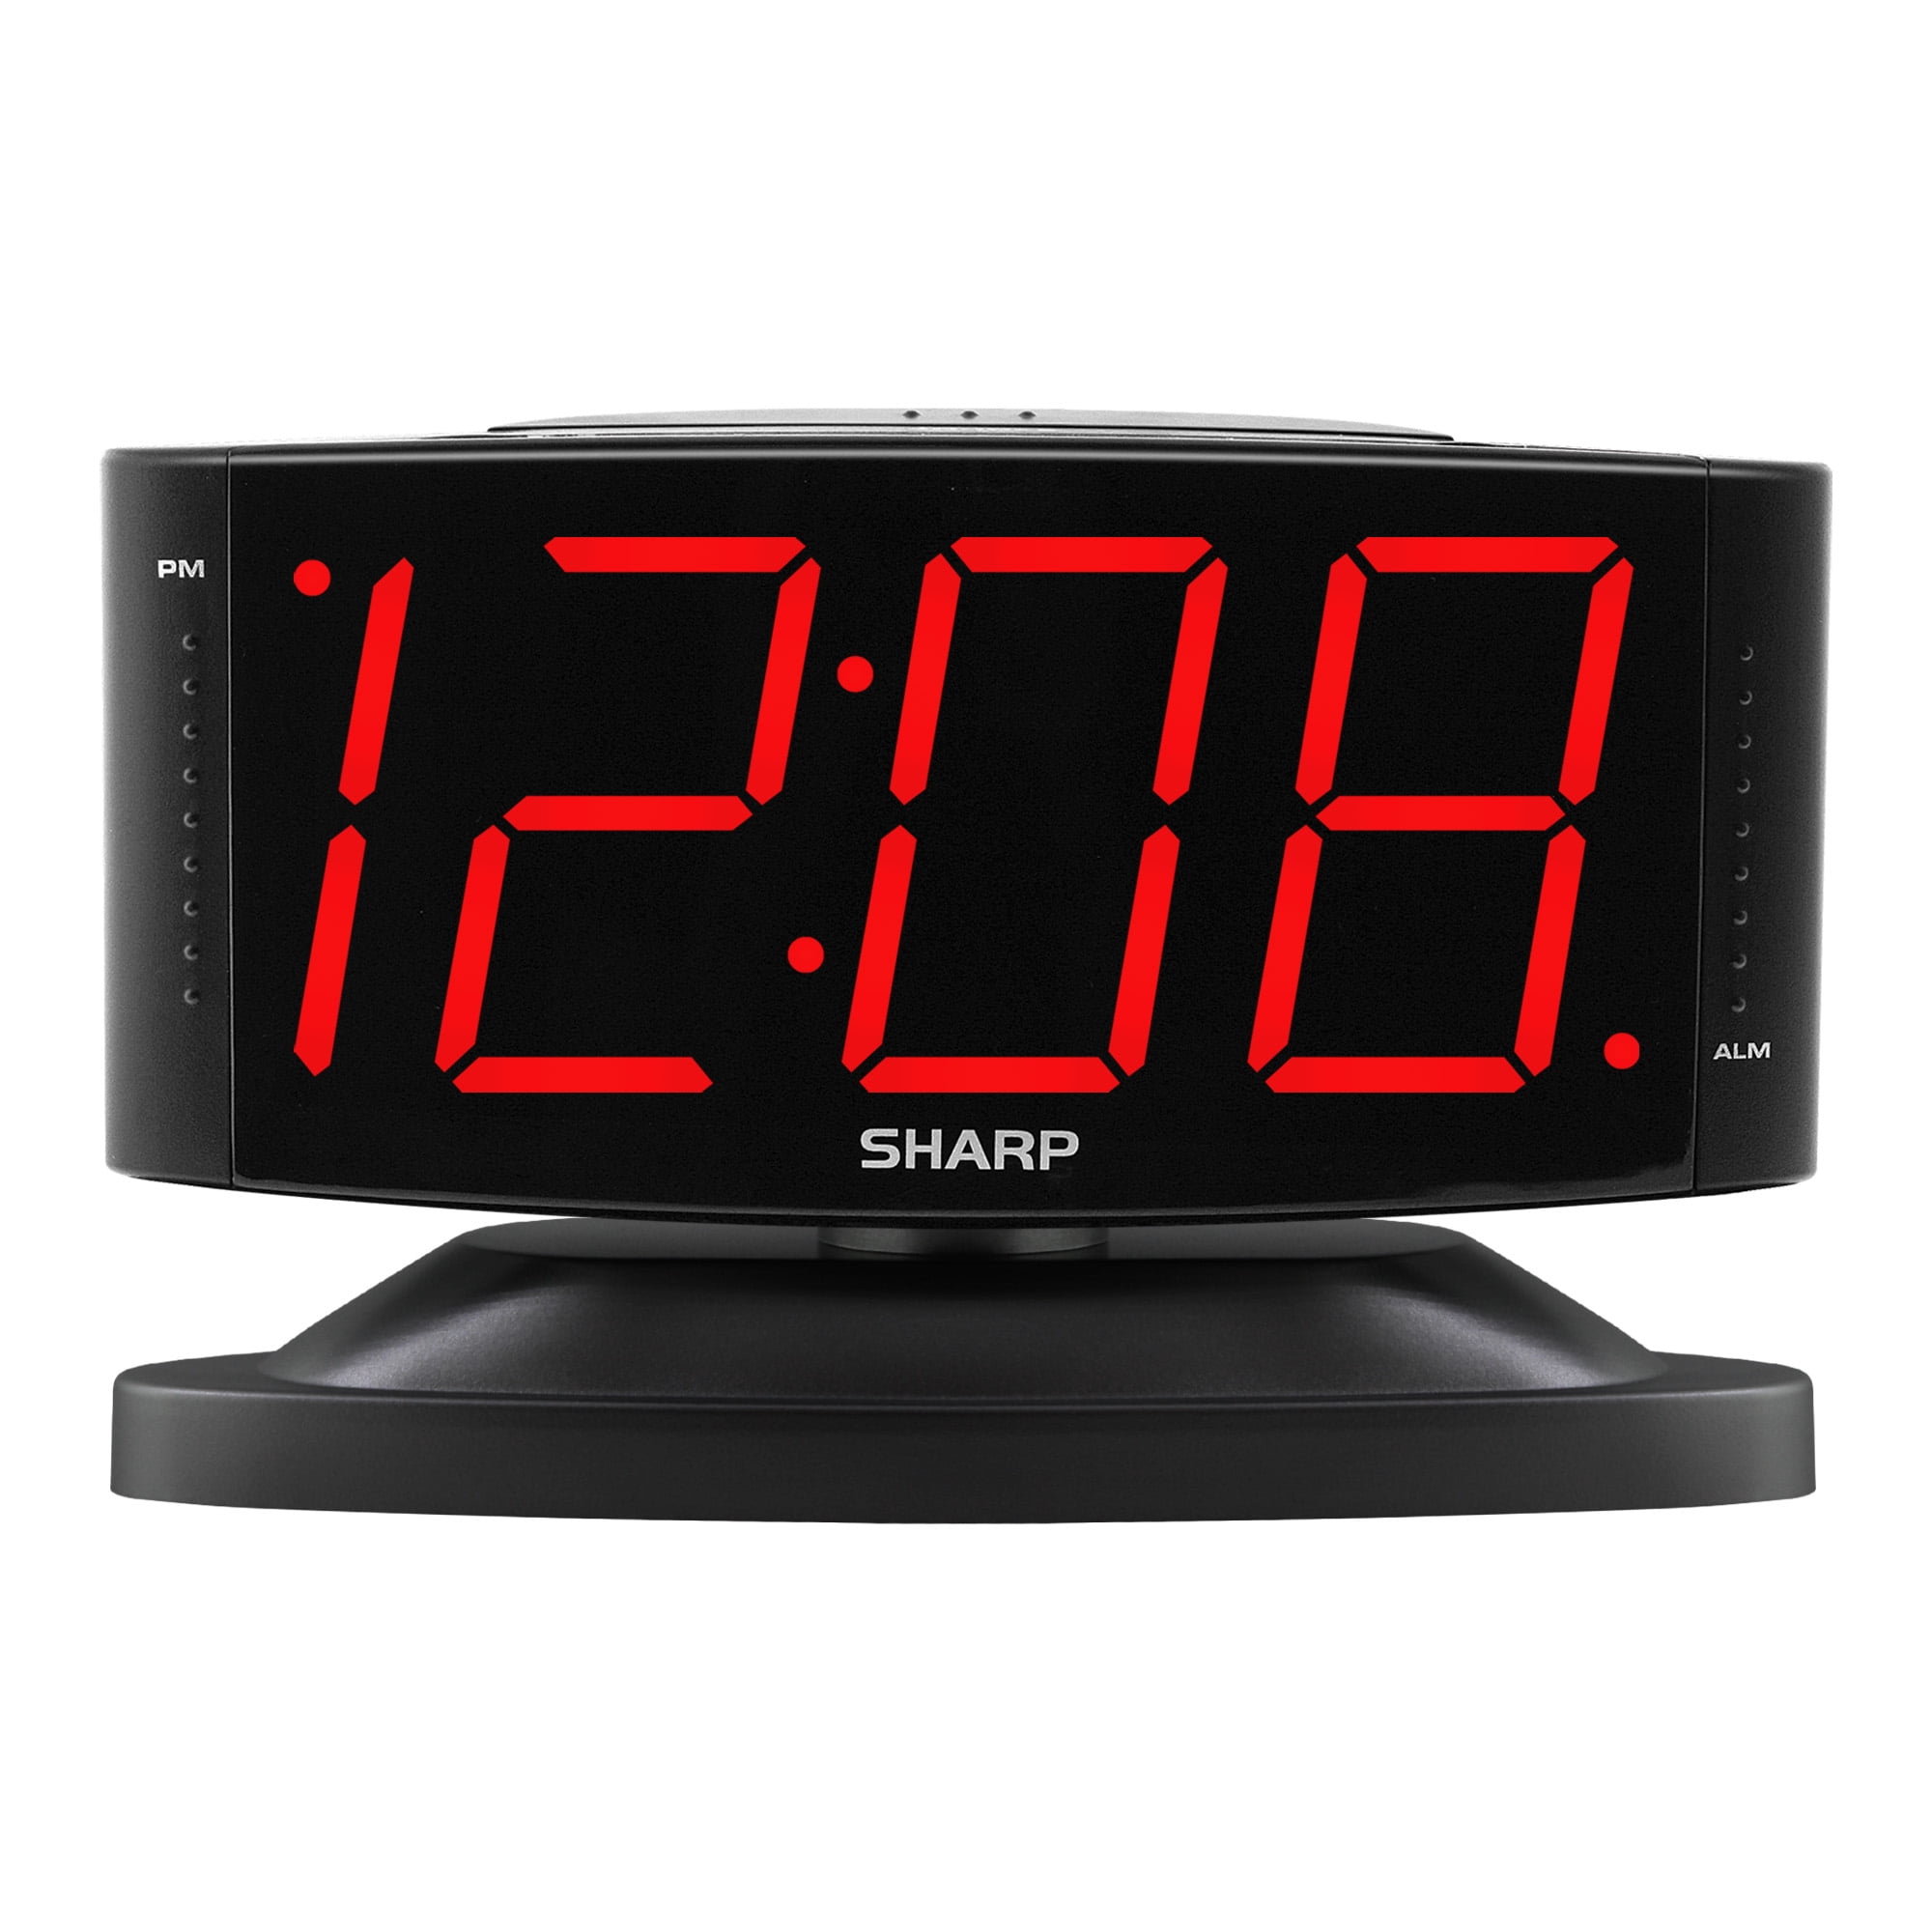 Large Digital Alarm Clock SHARP LED Display Swivel Base Electric Beep Snooze New 